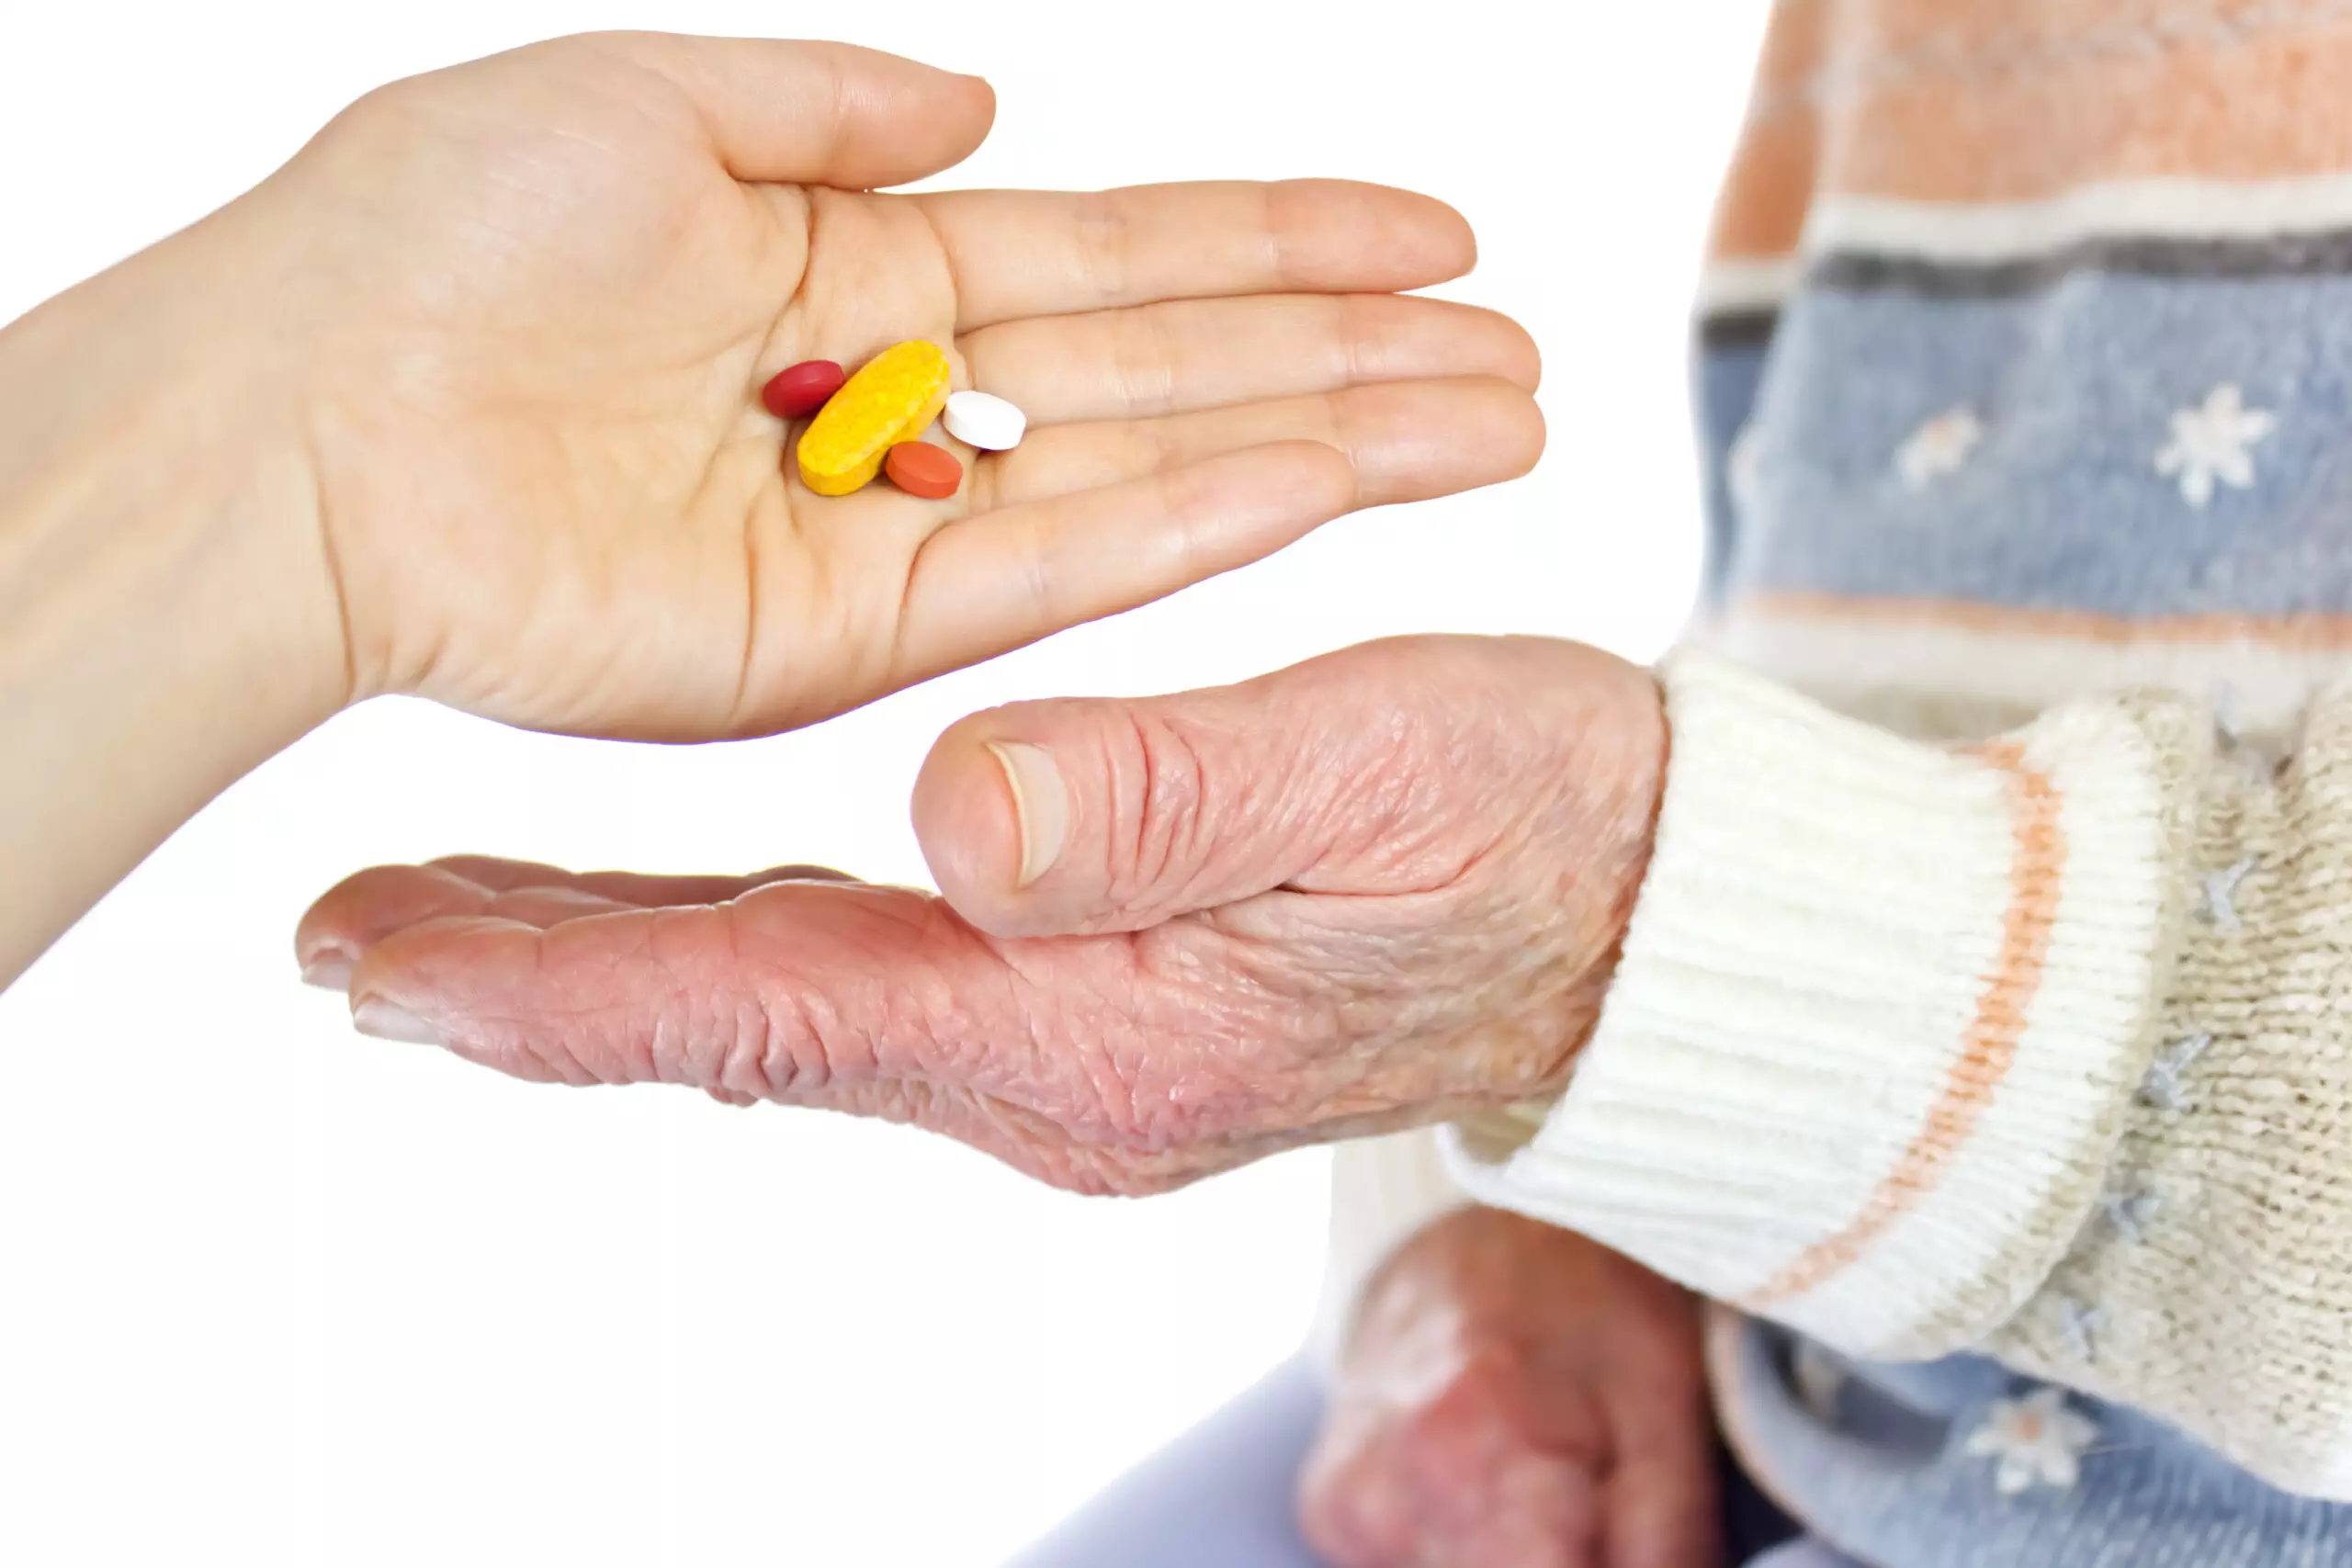 Handing medication to elderly person.